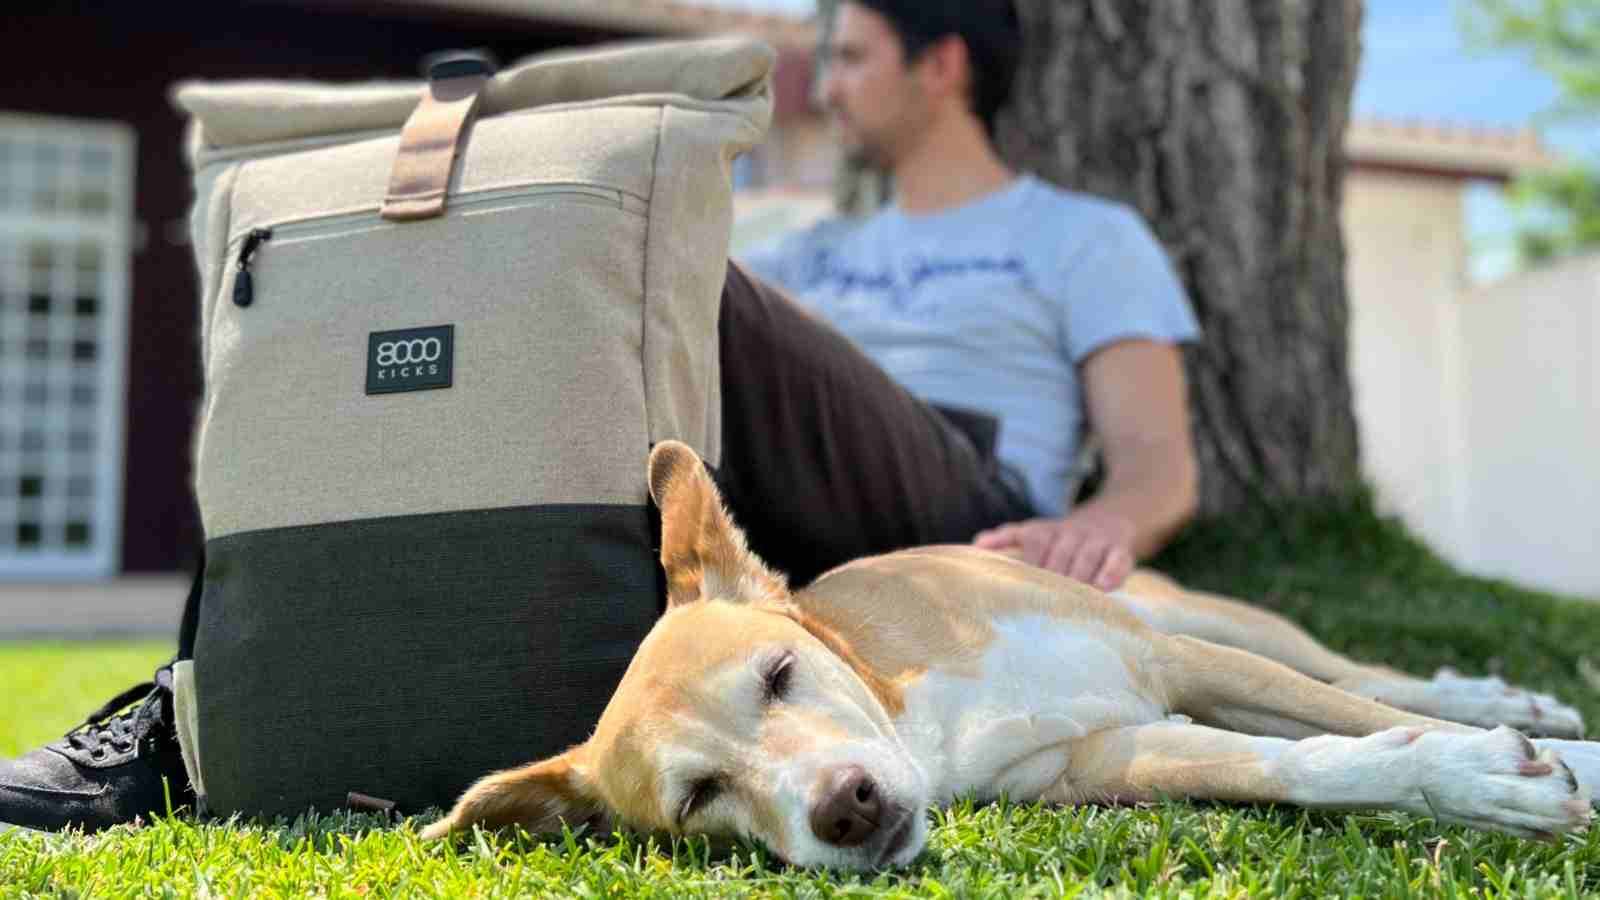 A man and dog rest near a hemp backpack